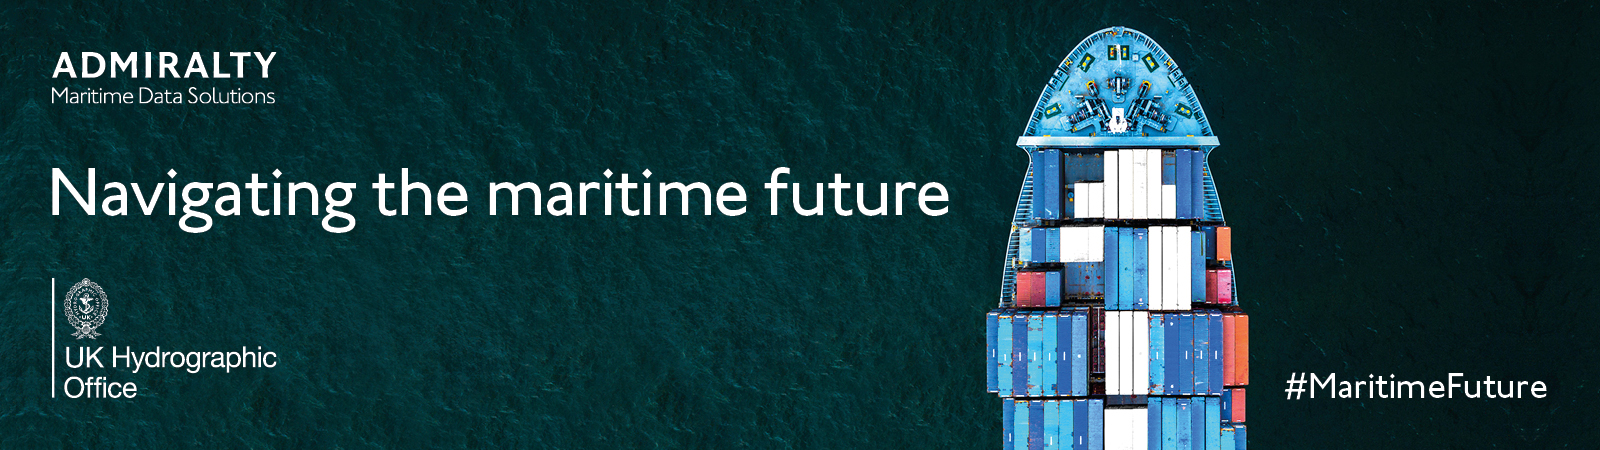 ADMIRALTY Navigating the Maritime Future SMM Hamburg